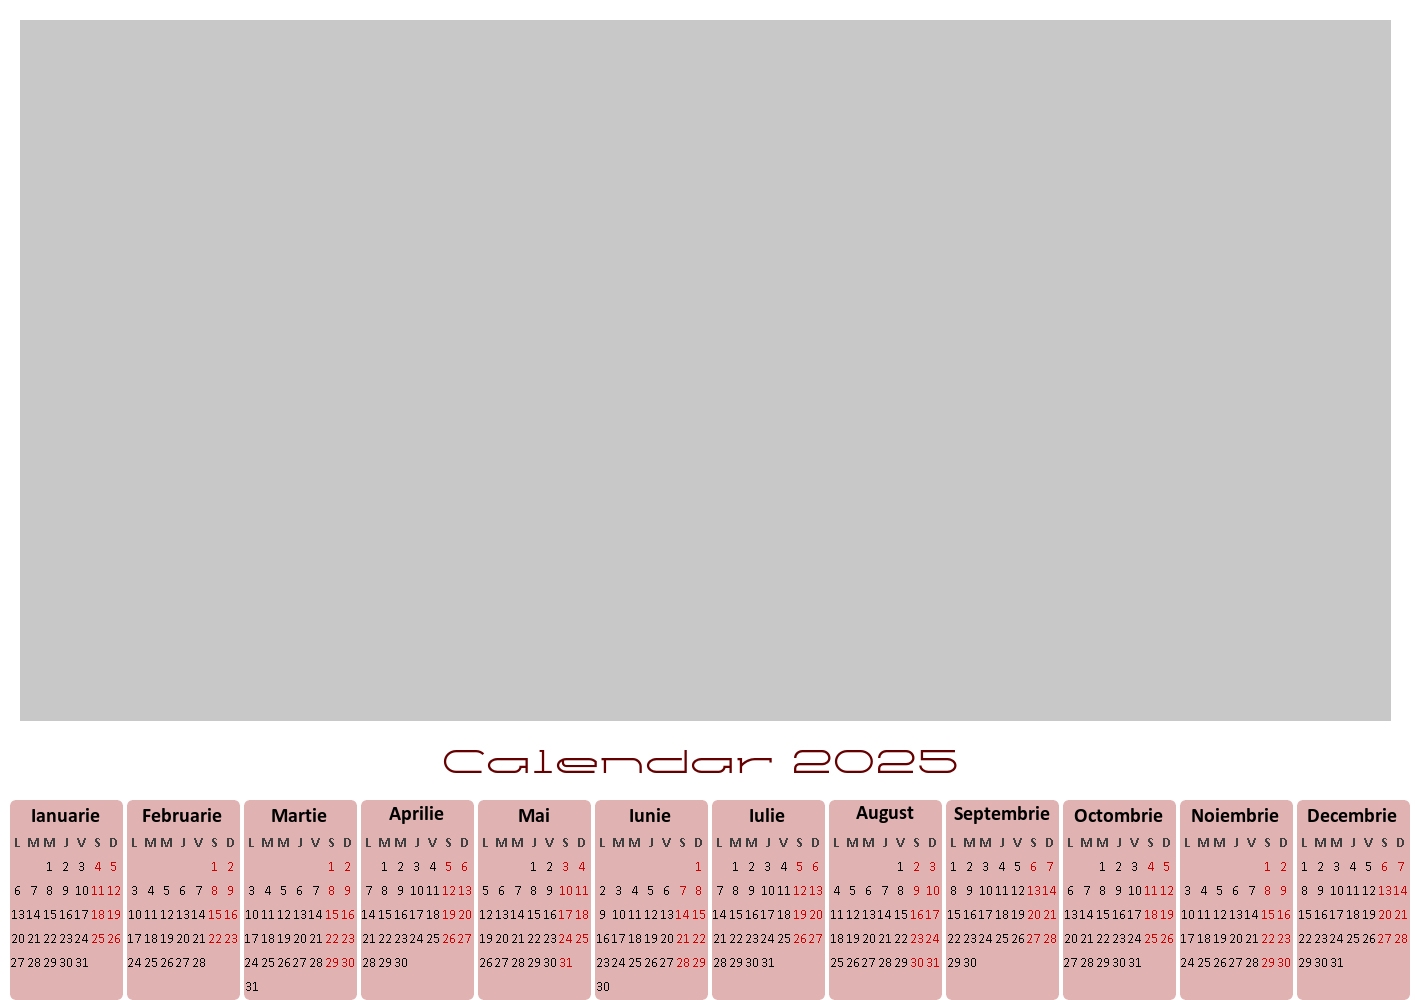 Felicitari personalizate cu calendare - Calendar 2025 clasic cu o poză